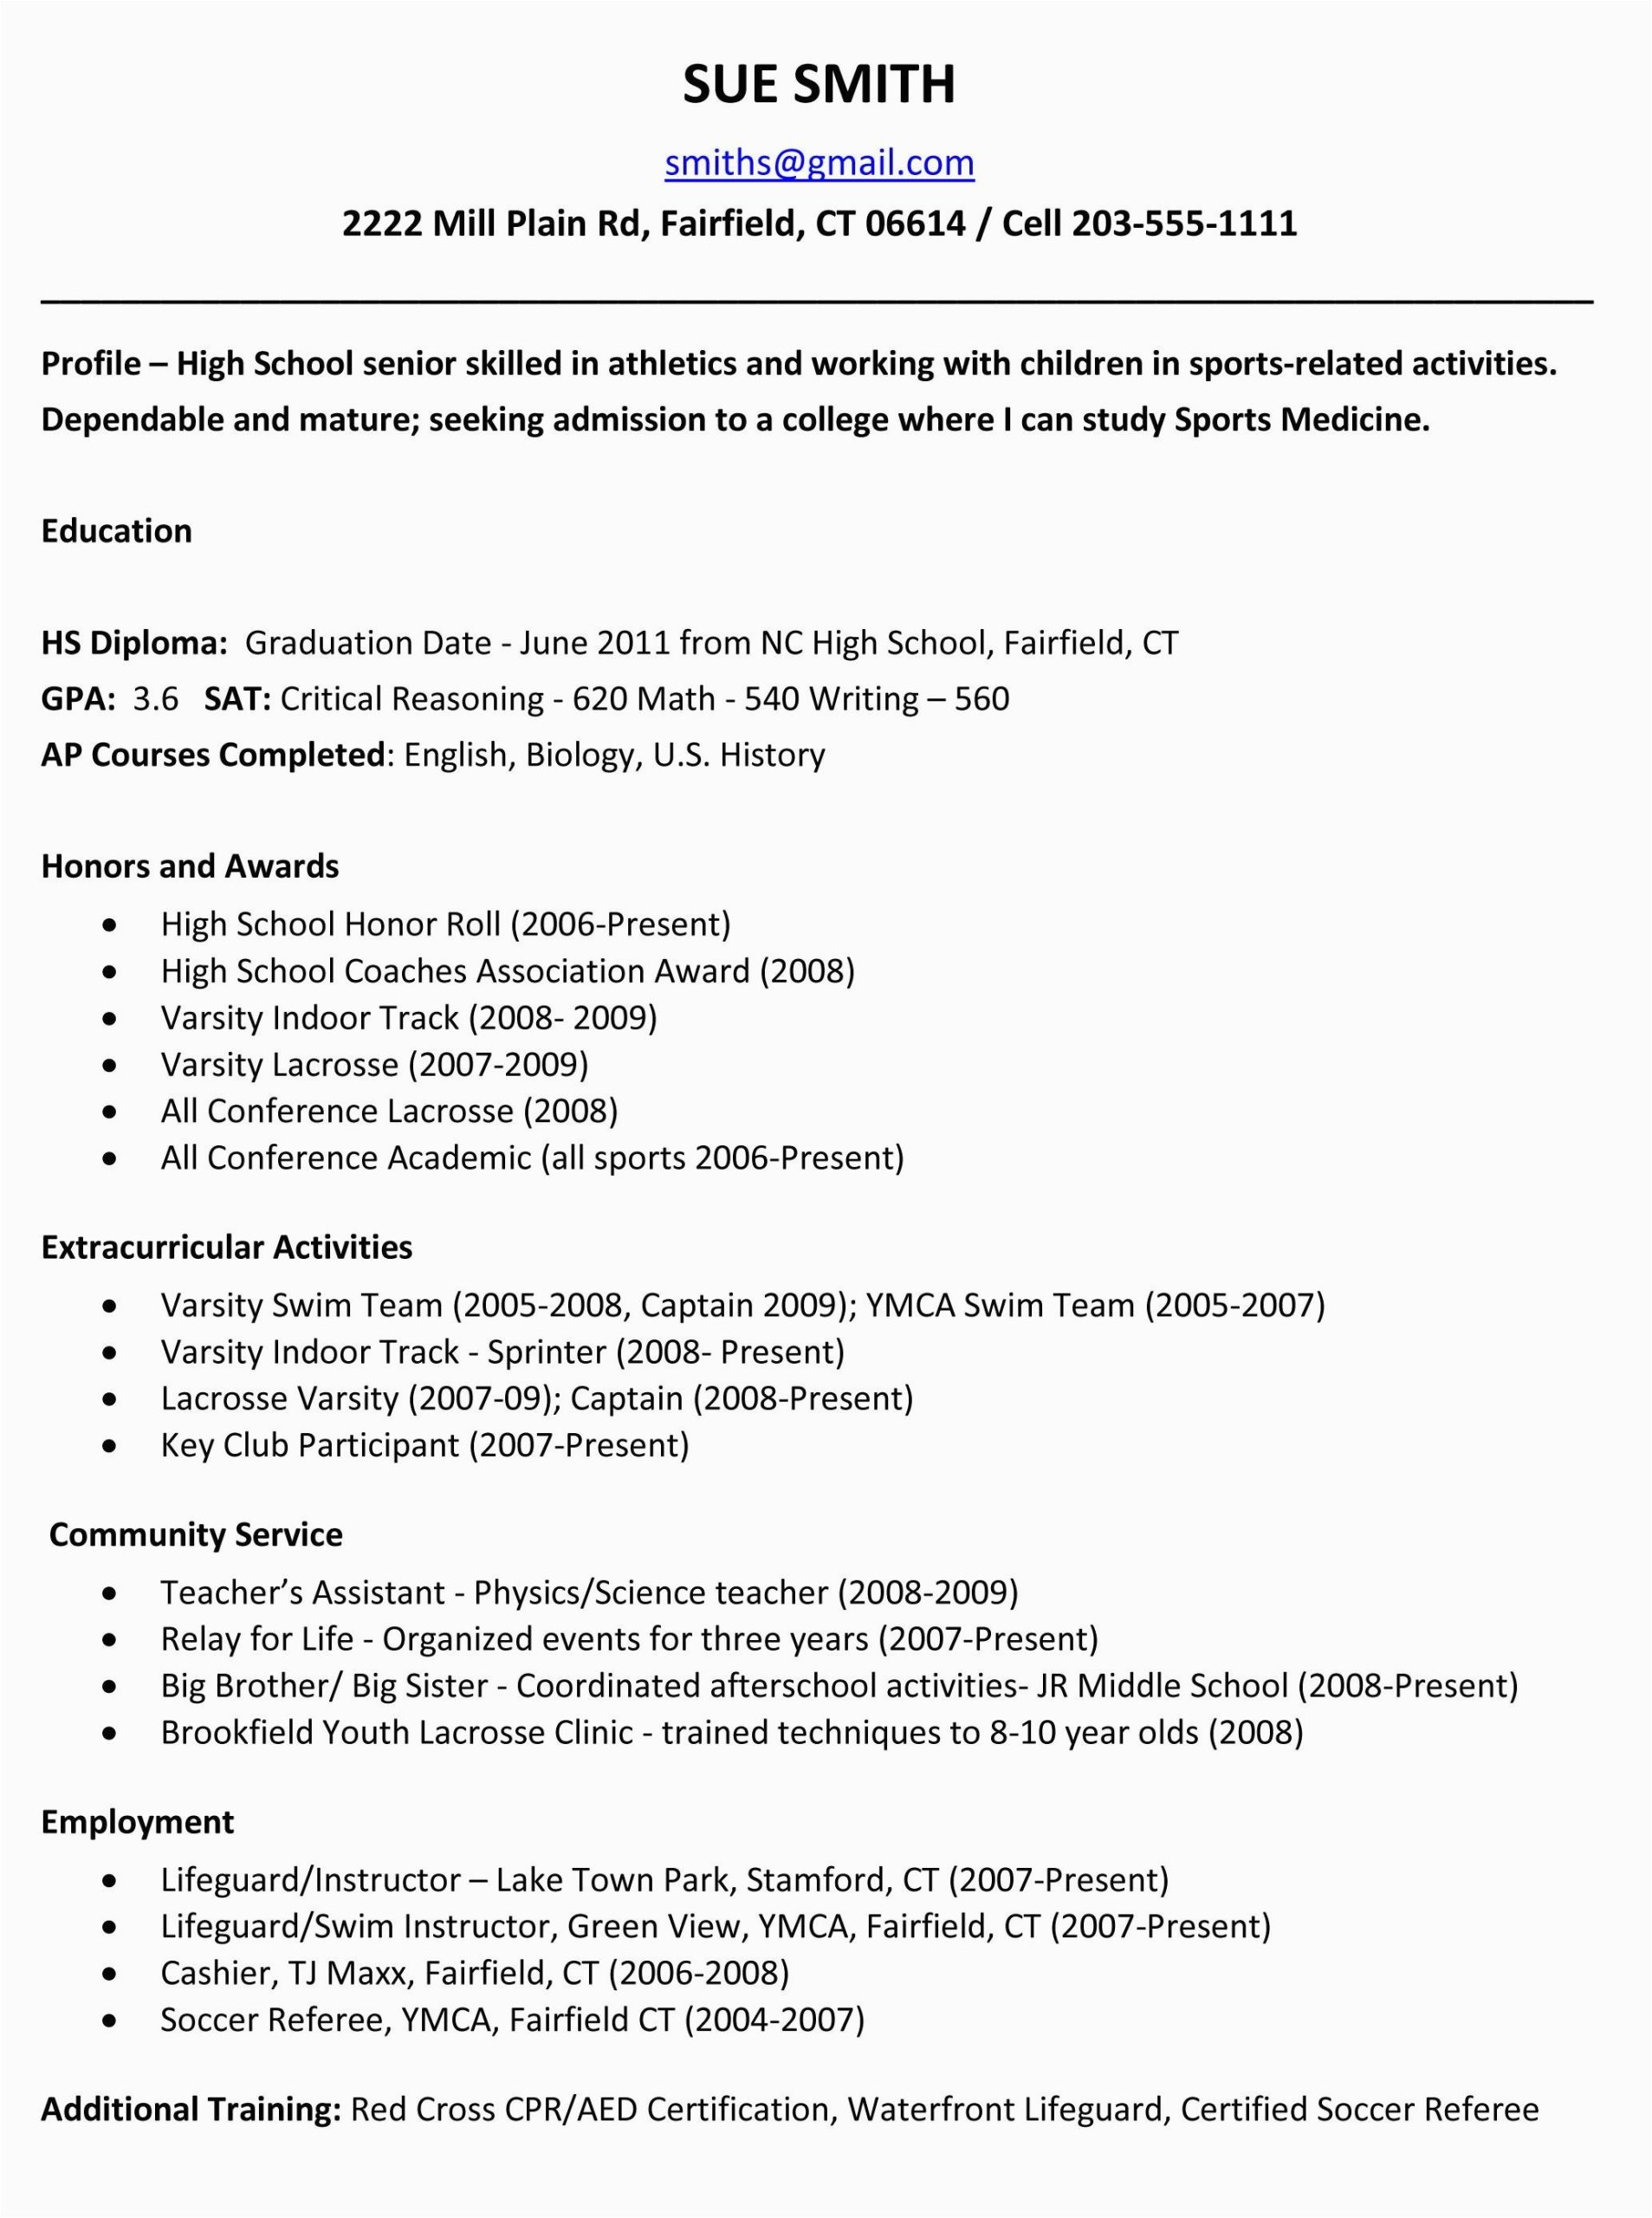 Sample School Resume for High School Applications Sample Resumes